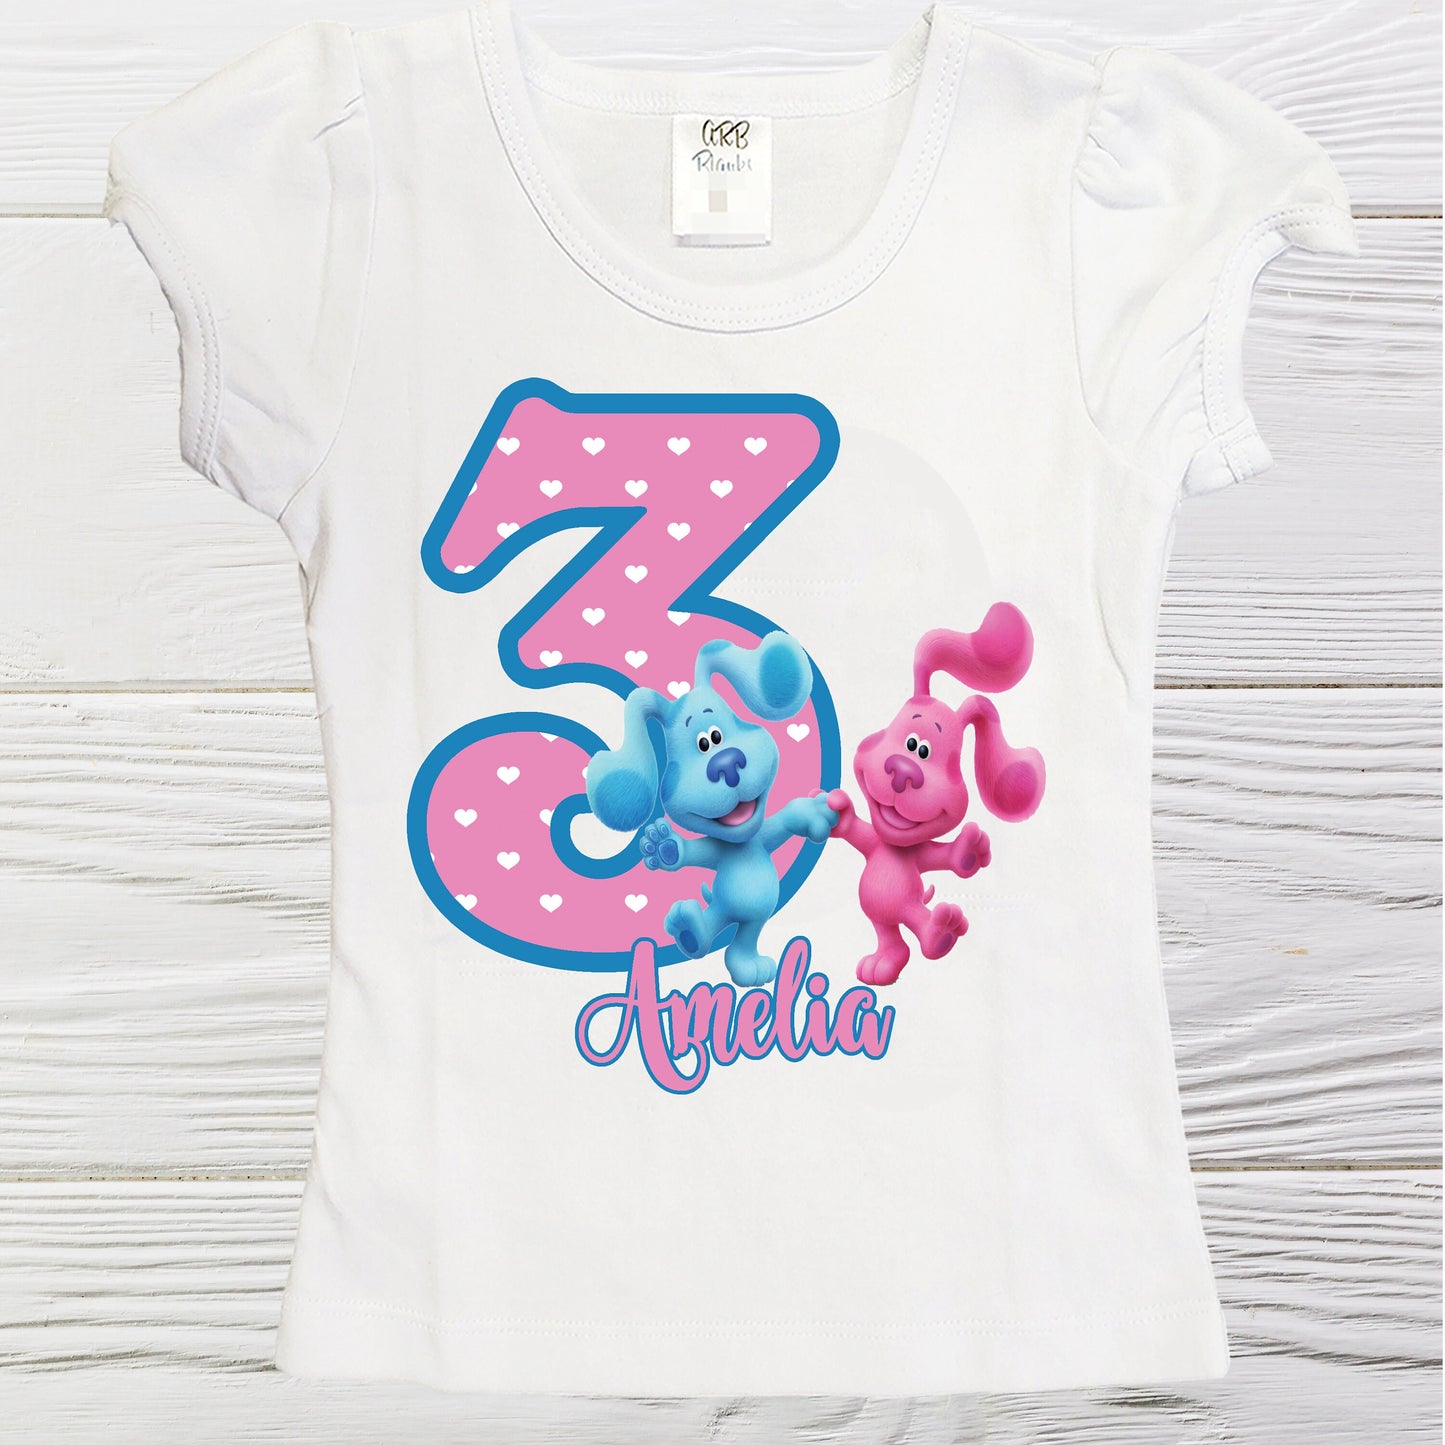 Blues Clues Birthday Shirt | Blues Clues  Girls Shirt | Personalized Blues Clues Shirt | Kids Birthday Shirt |Blues Clues | Girls shirts